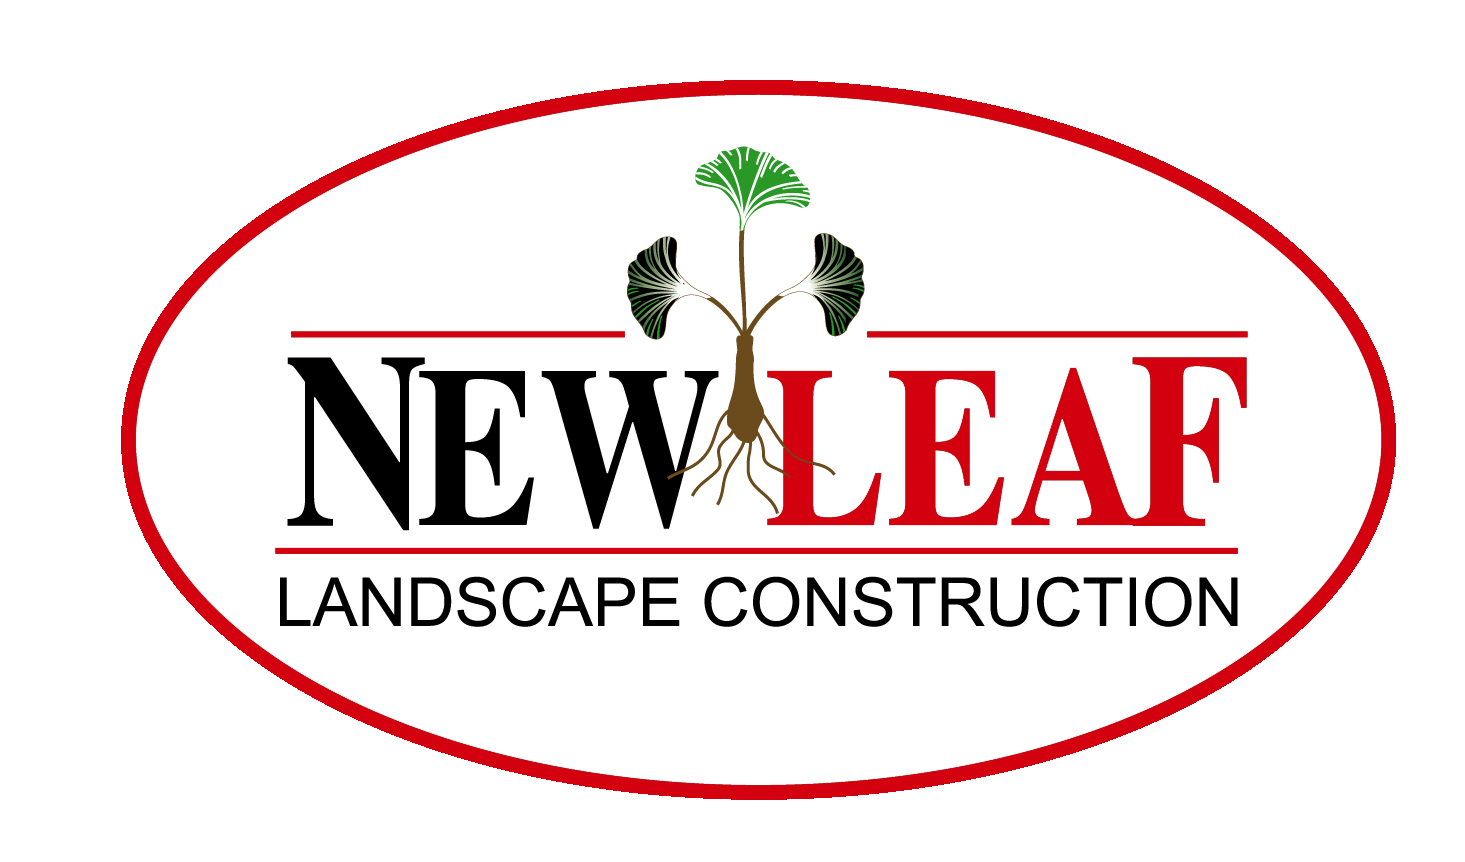 New Leaf Landscape Construction Charleston, SC